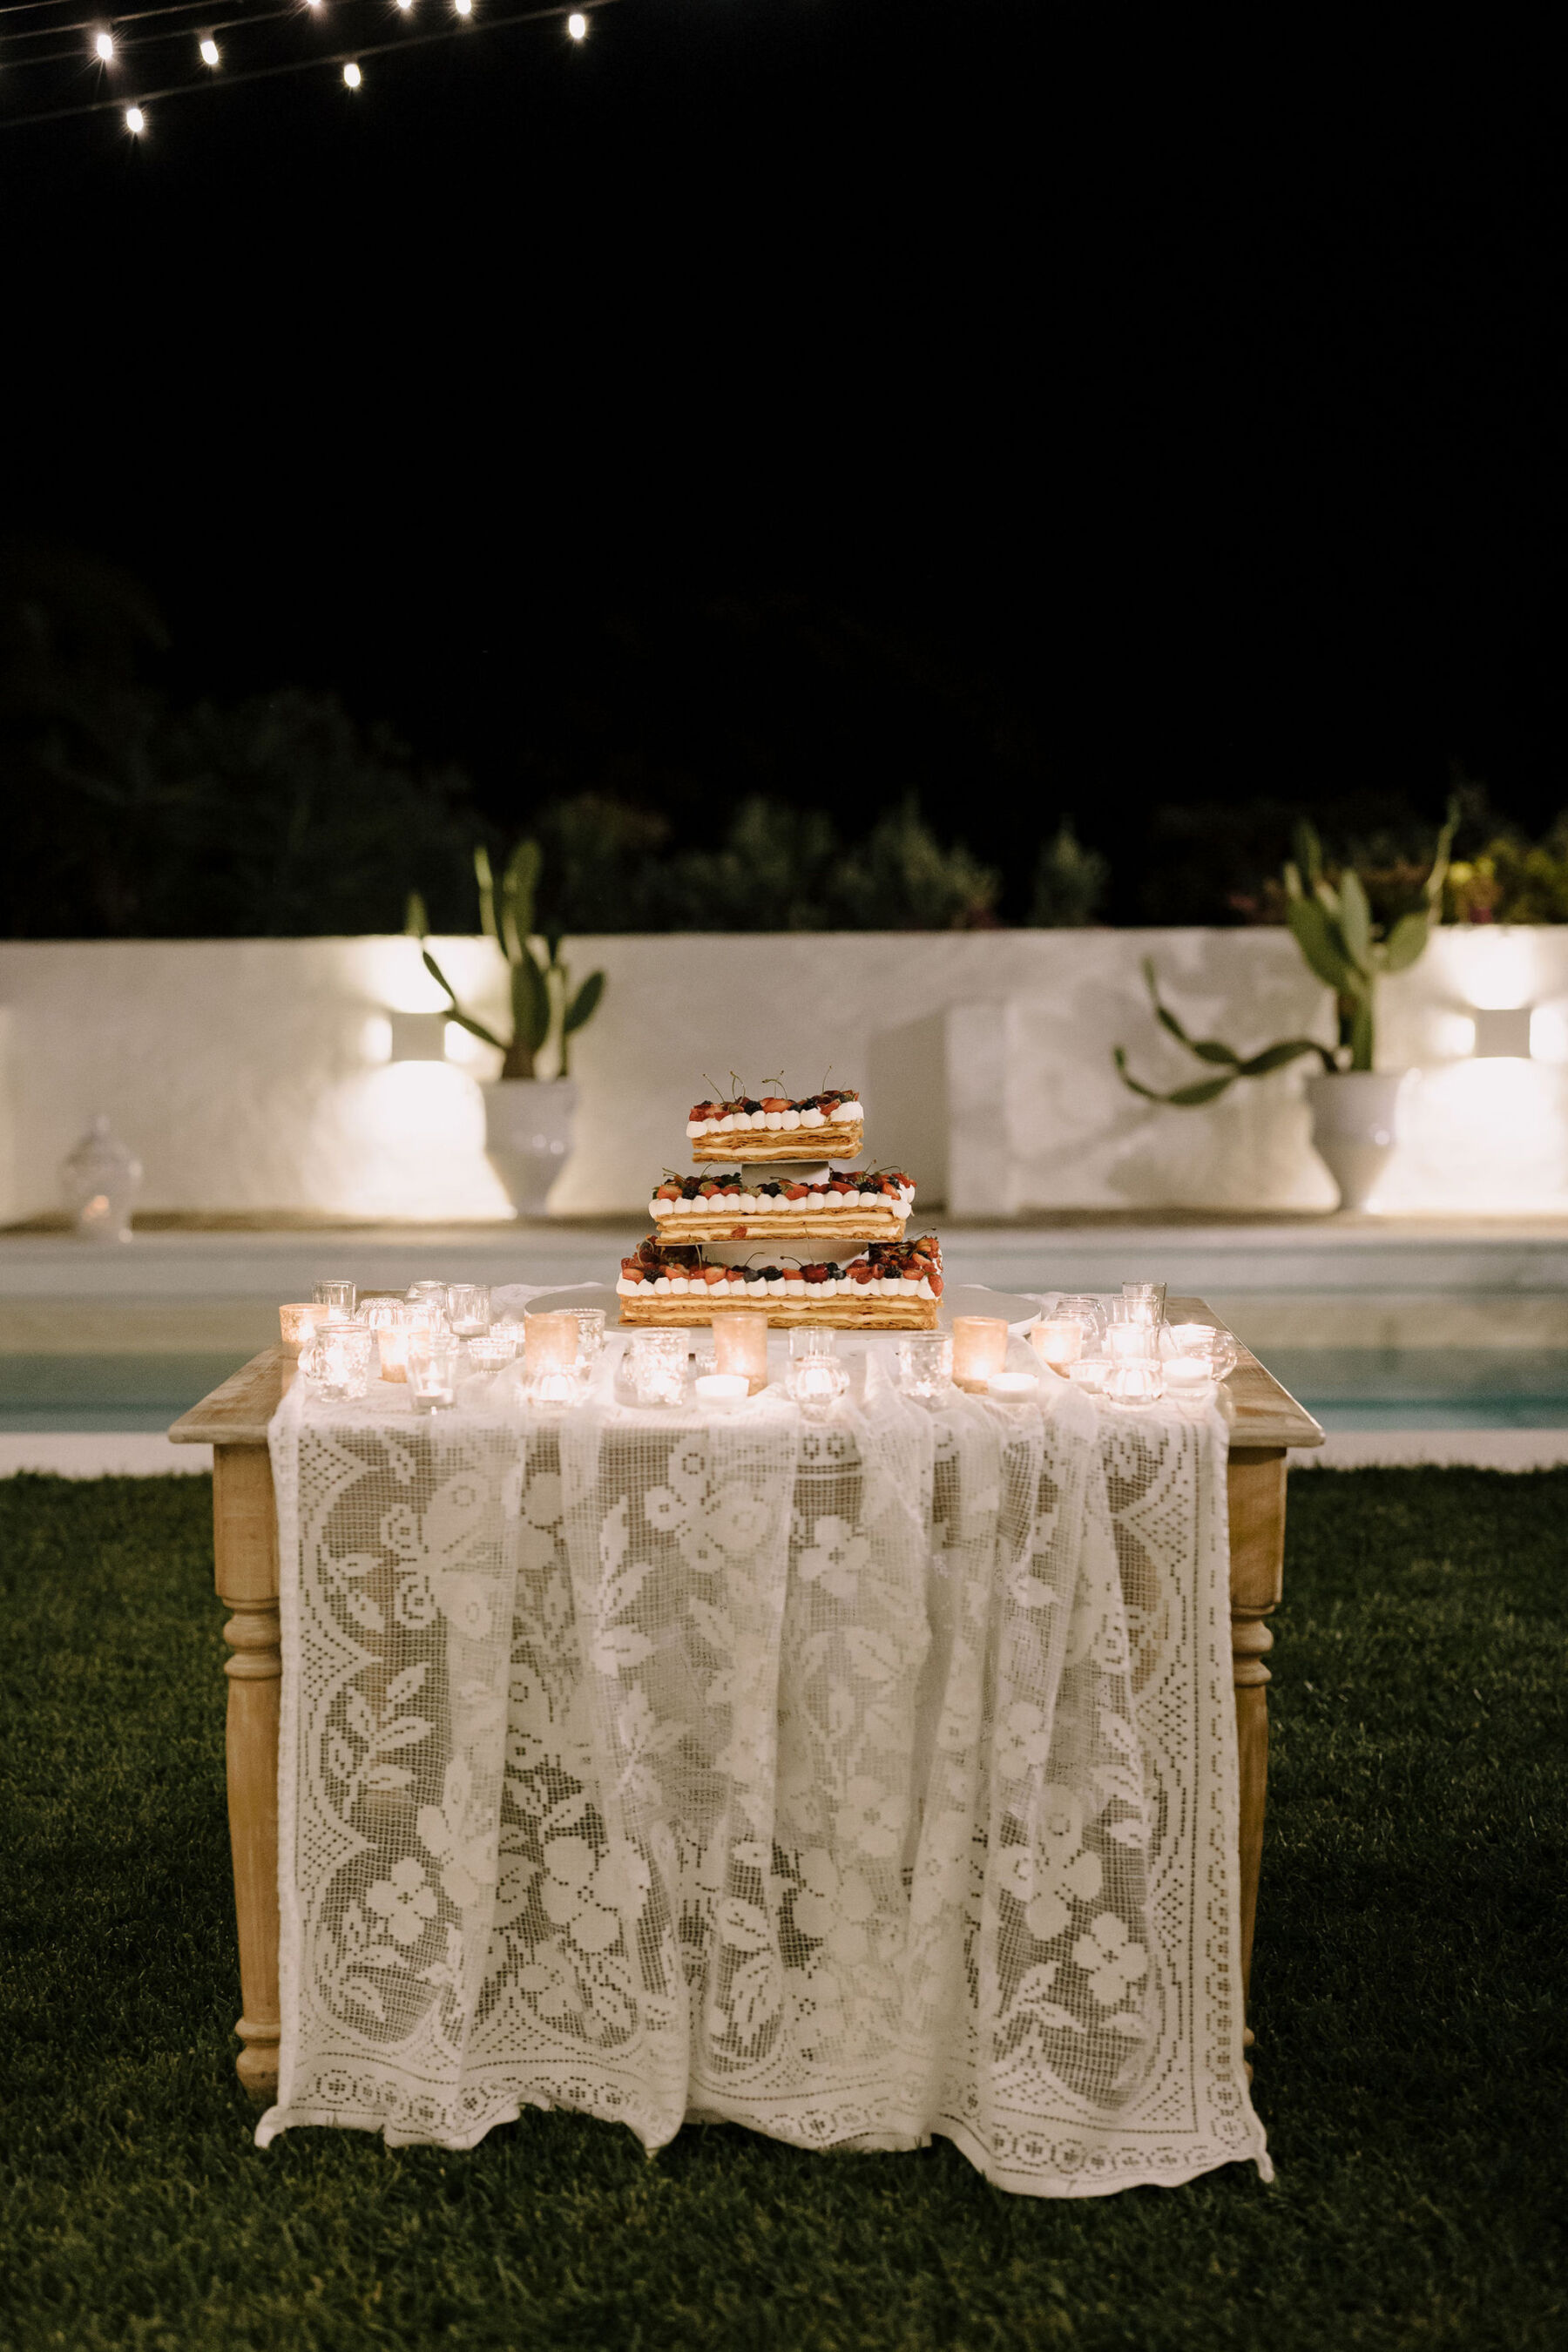 Mille feuille Italian wedding cake. 